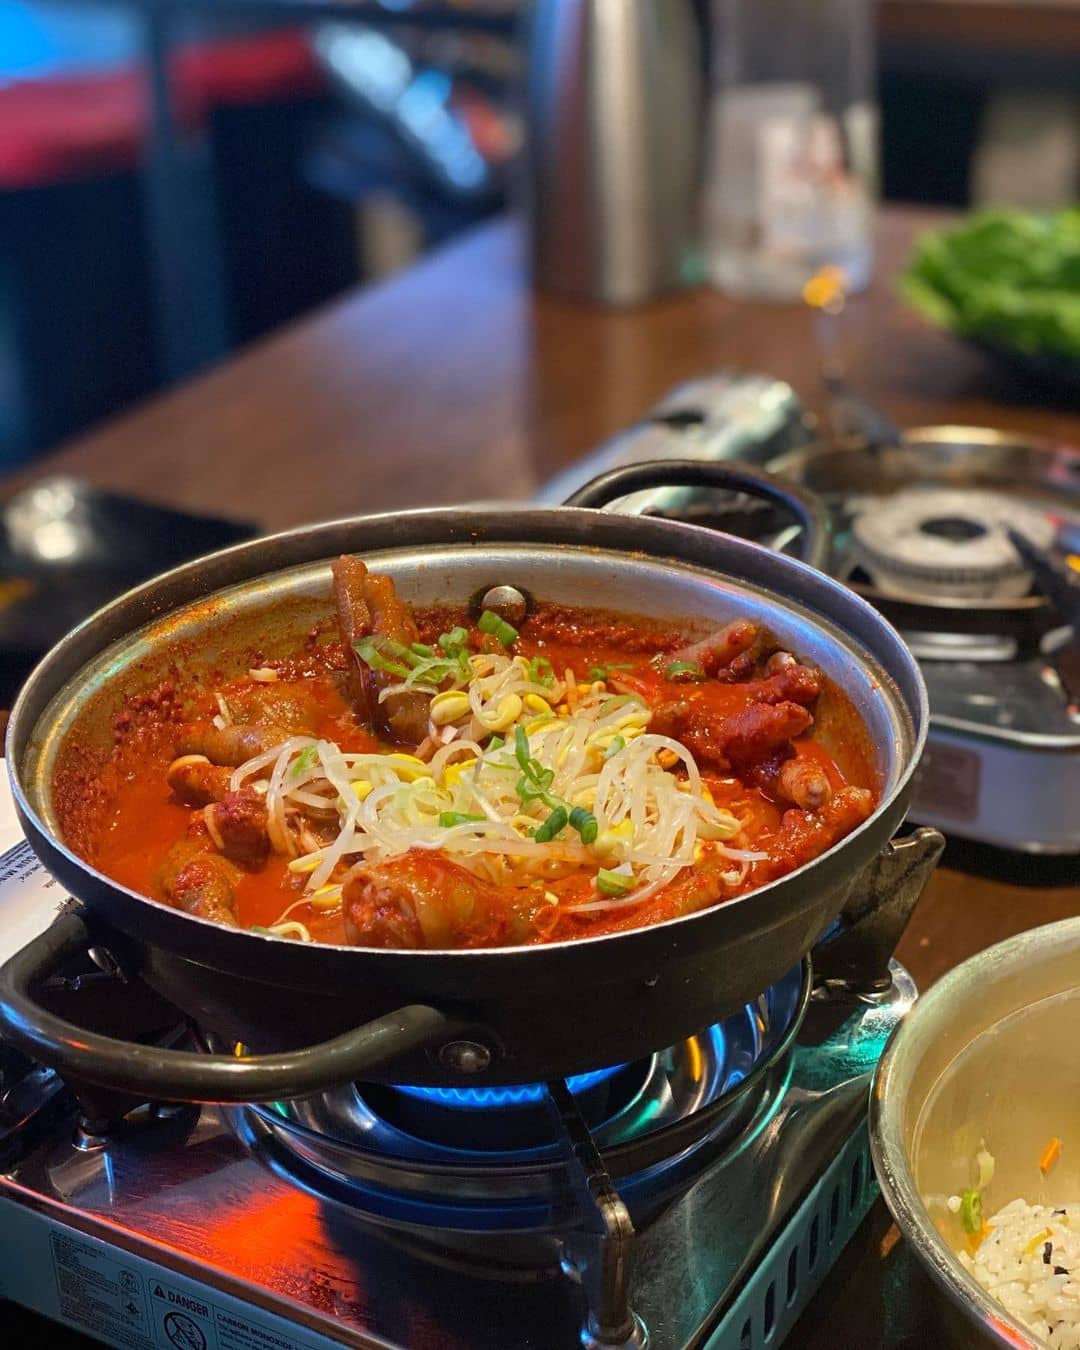 best korean restaurant in richmond - mr.bro korean bistro hot pot bowl with food inside on table